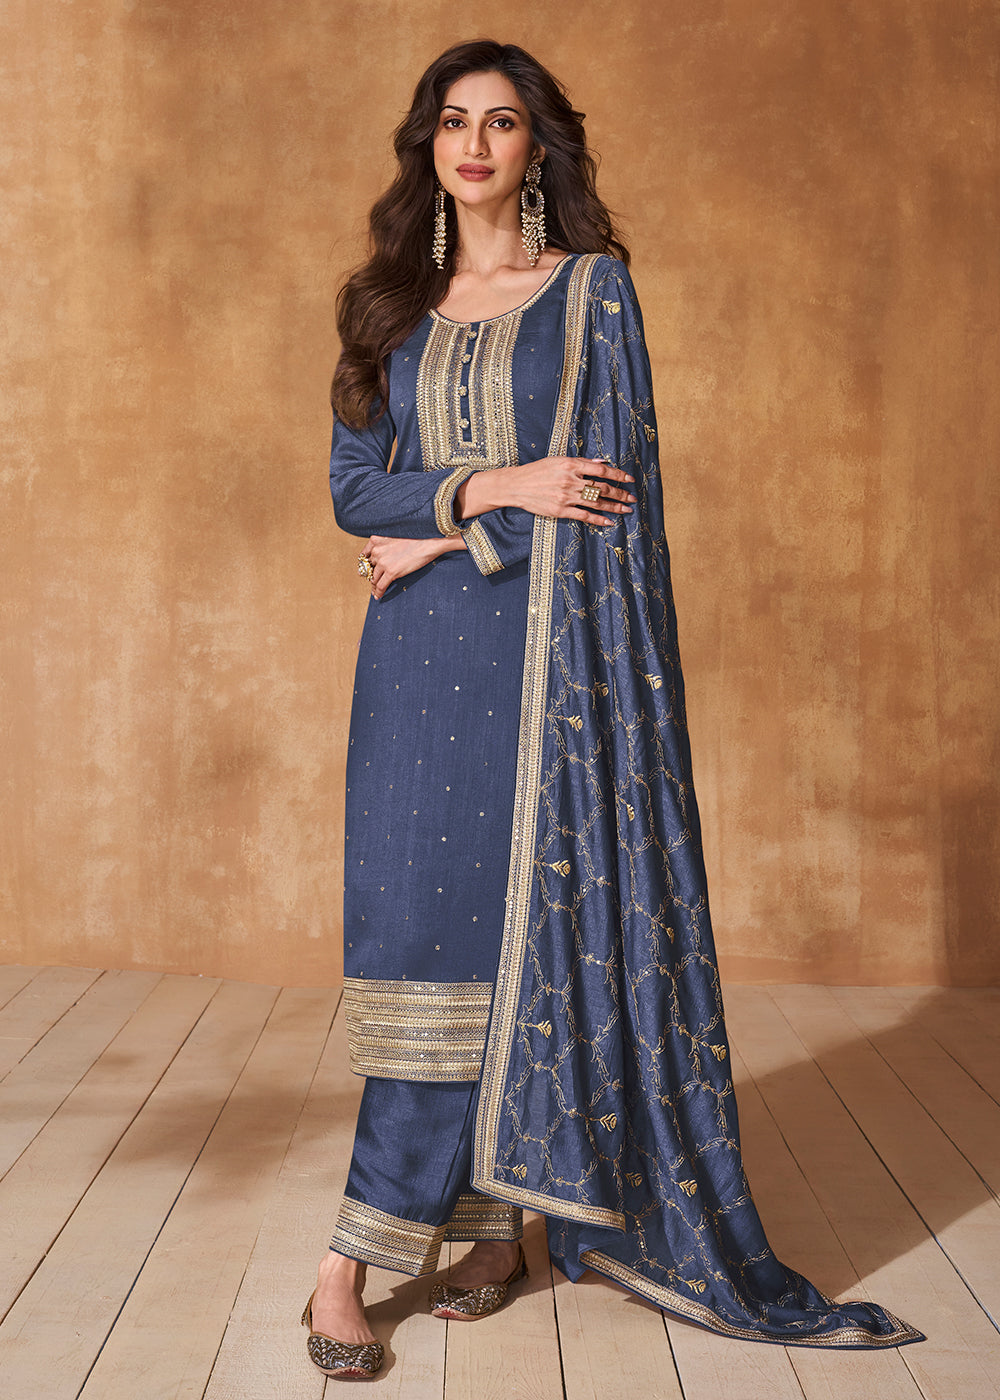 Buy Now Lavender Blue Premium Silk Festive Wear Salwar Kurta Online in USA, UK, Canada, Germany, Australia & Worldwide at Empress Clothing.